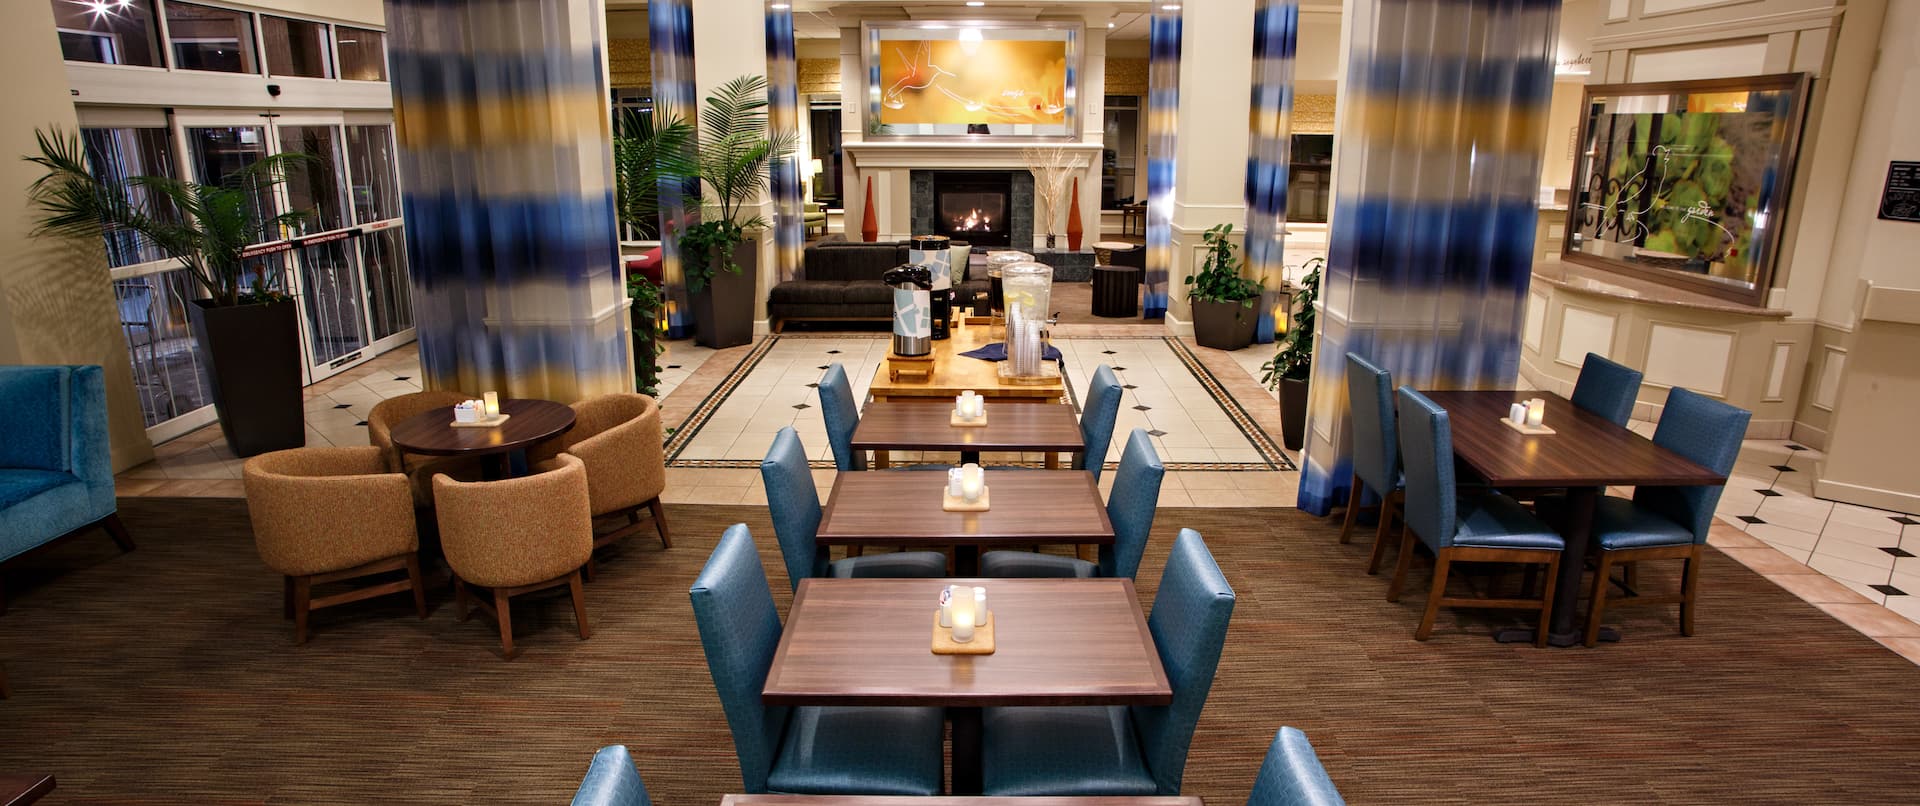 hotel lobby seating